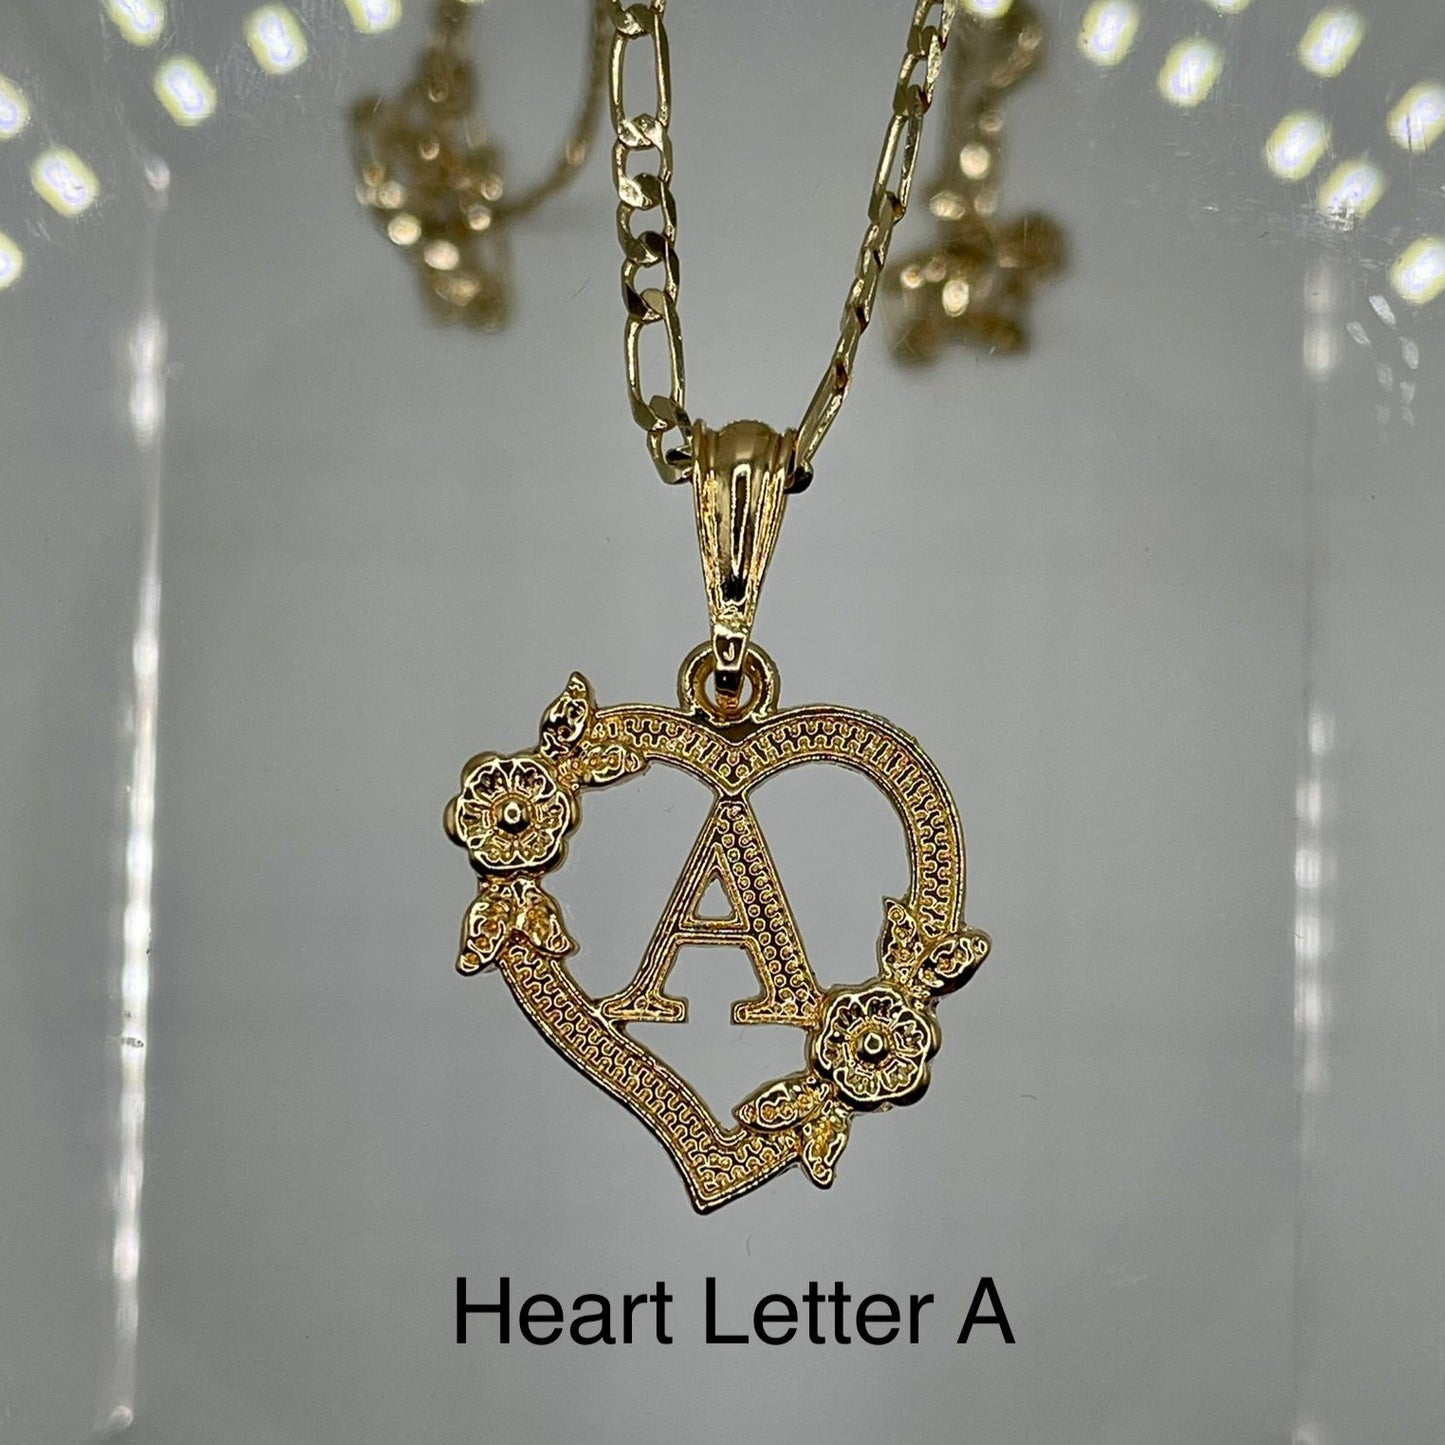 Heart letter A pendant. Gold heart pendant. Letter pendants.